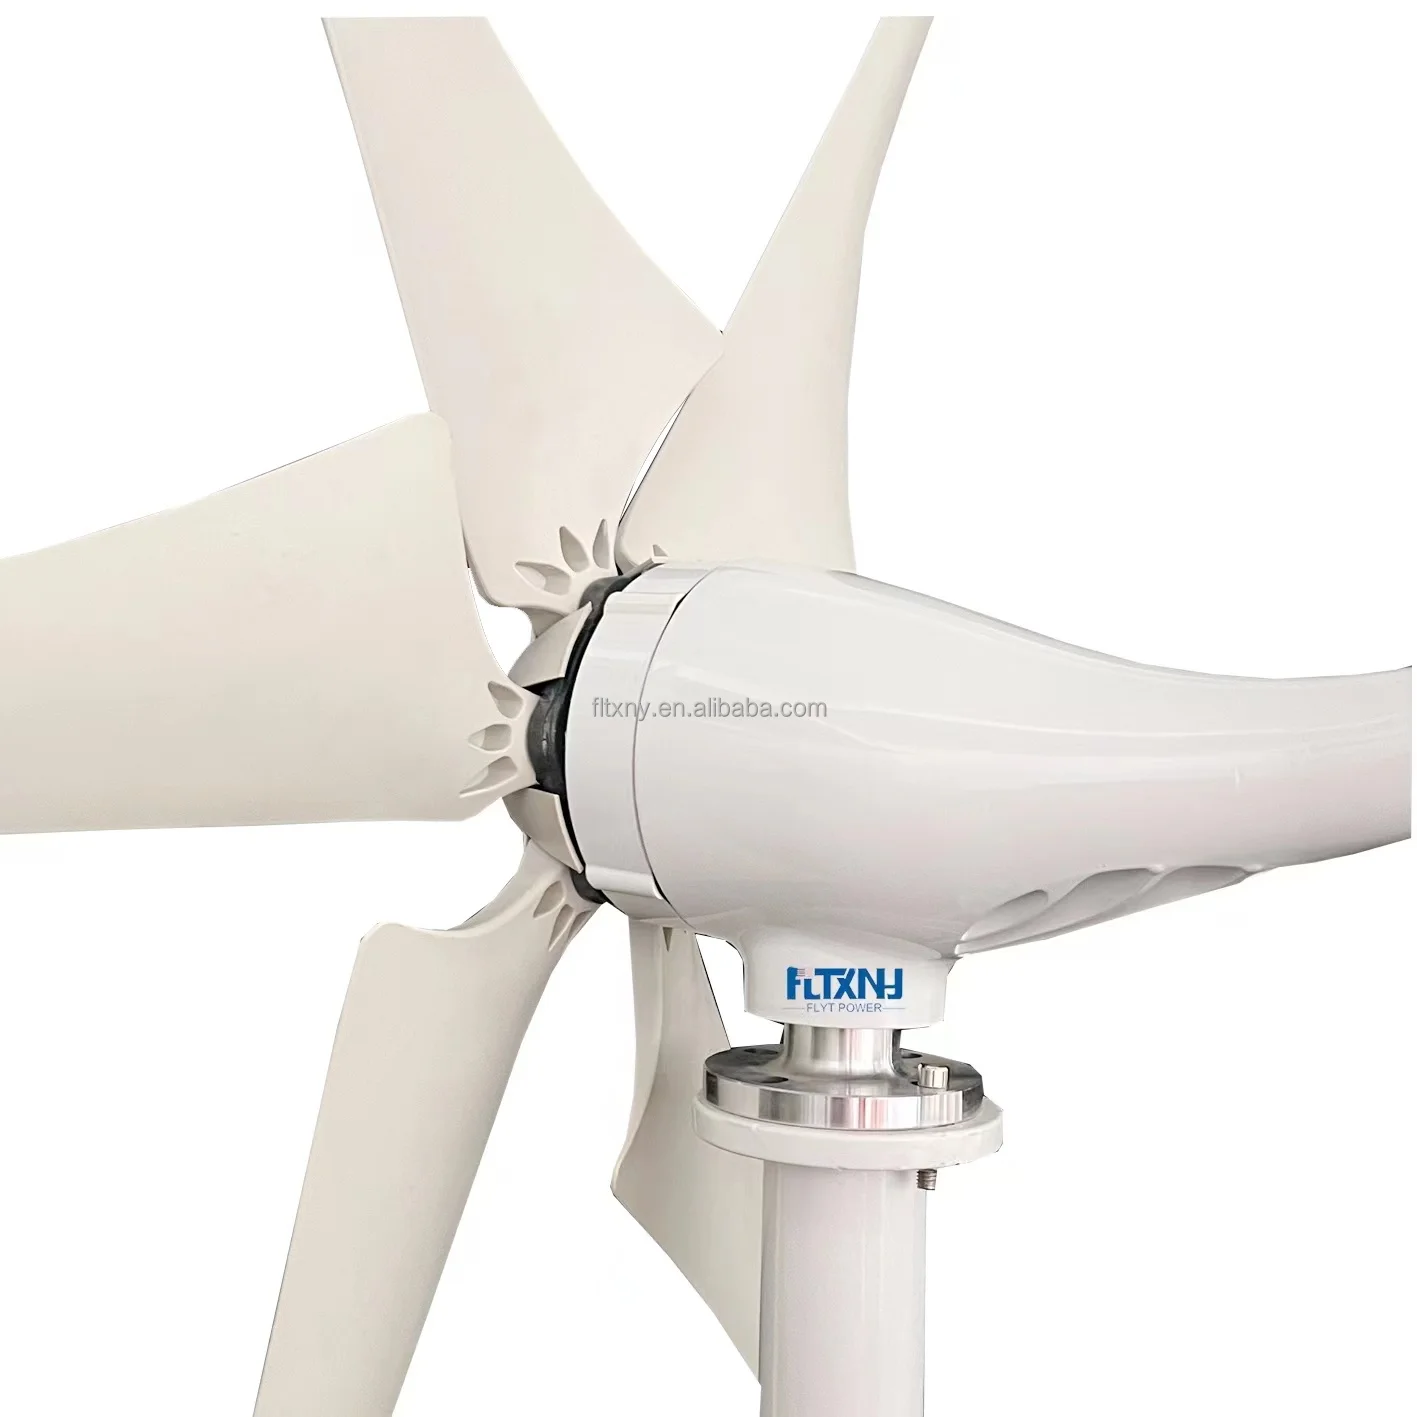 

1000w 1kw 5 Phase Wind Turbine Small Wind Generator Horizontal Axis Wind Turbine For Home